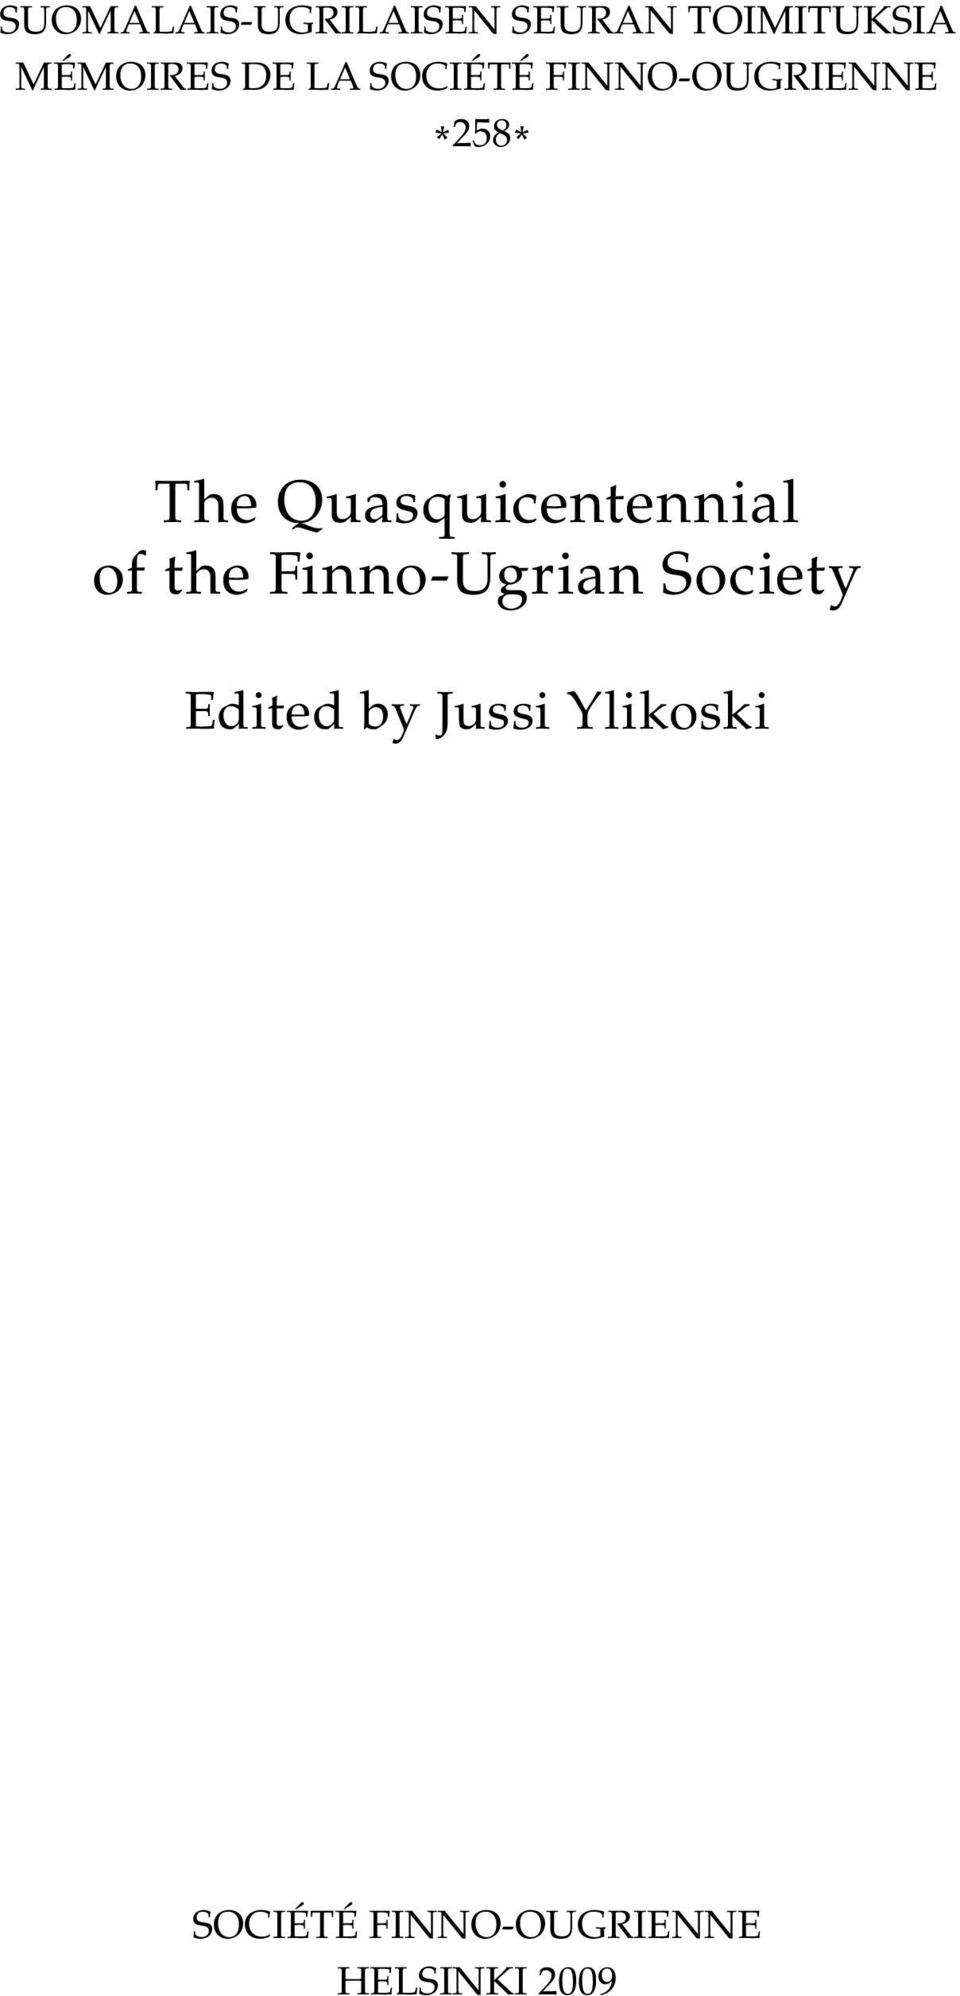 Quasquicentennial of the Finno-Ugrian Society